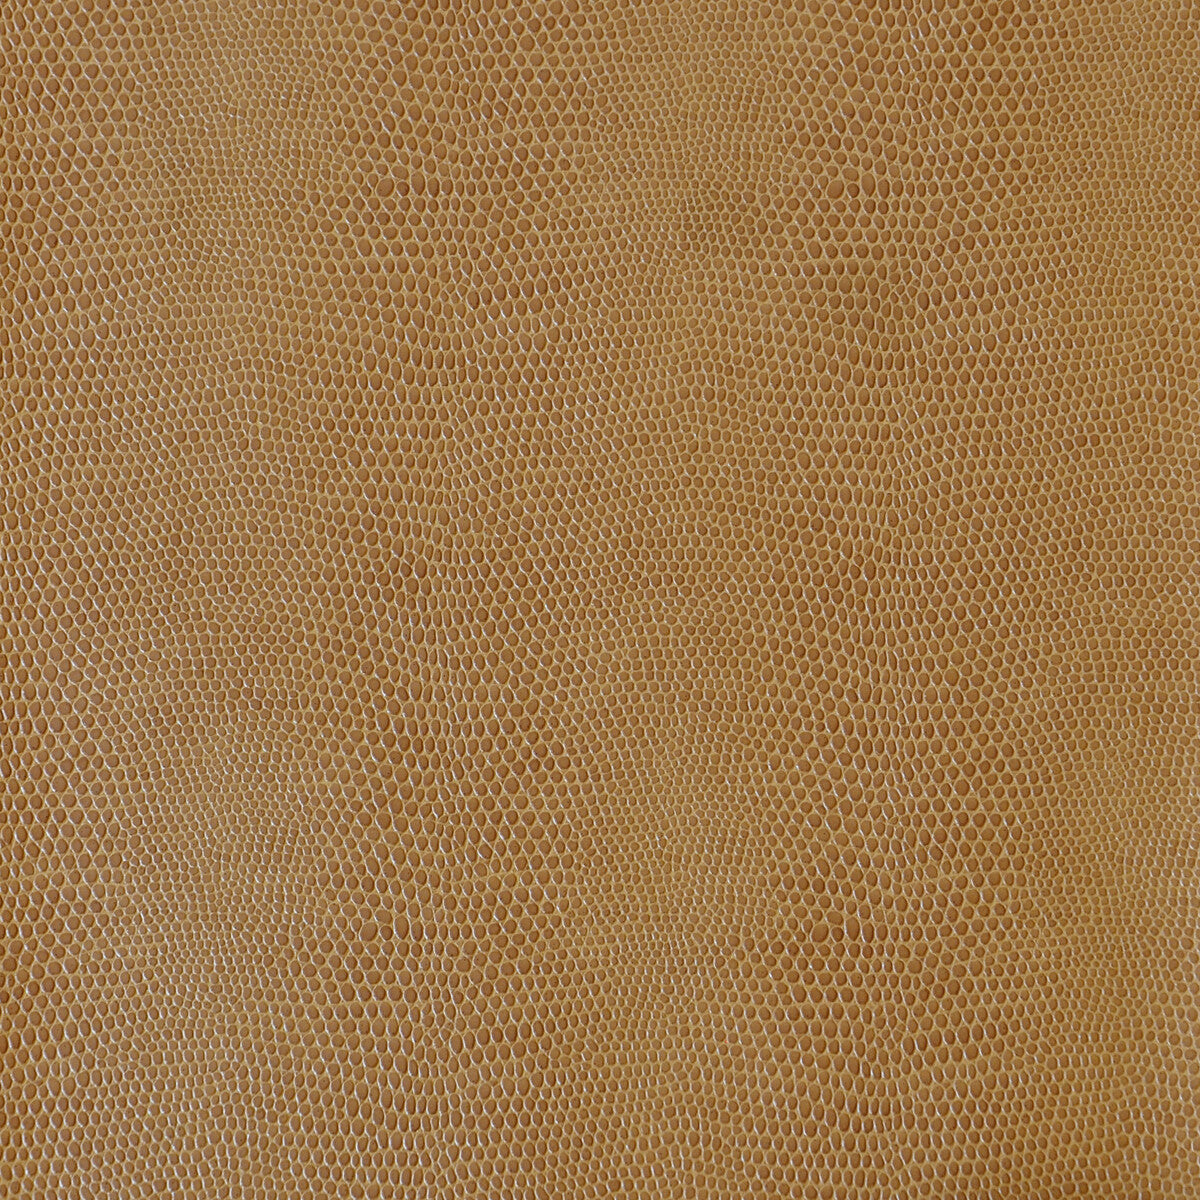 Kravet Design fabric in derek-416 color - pattern DEREK.416.0 - by Kravet Design